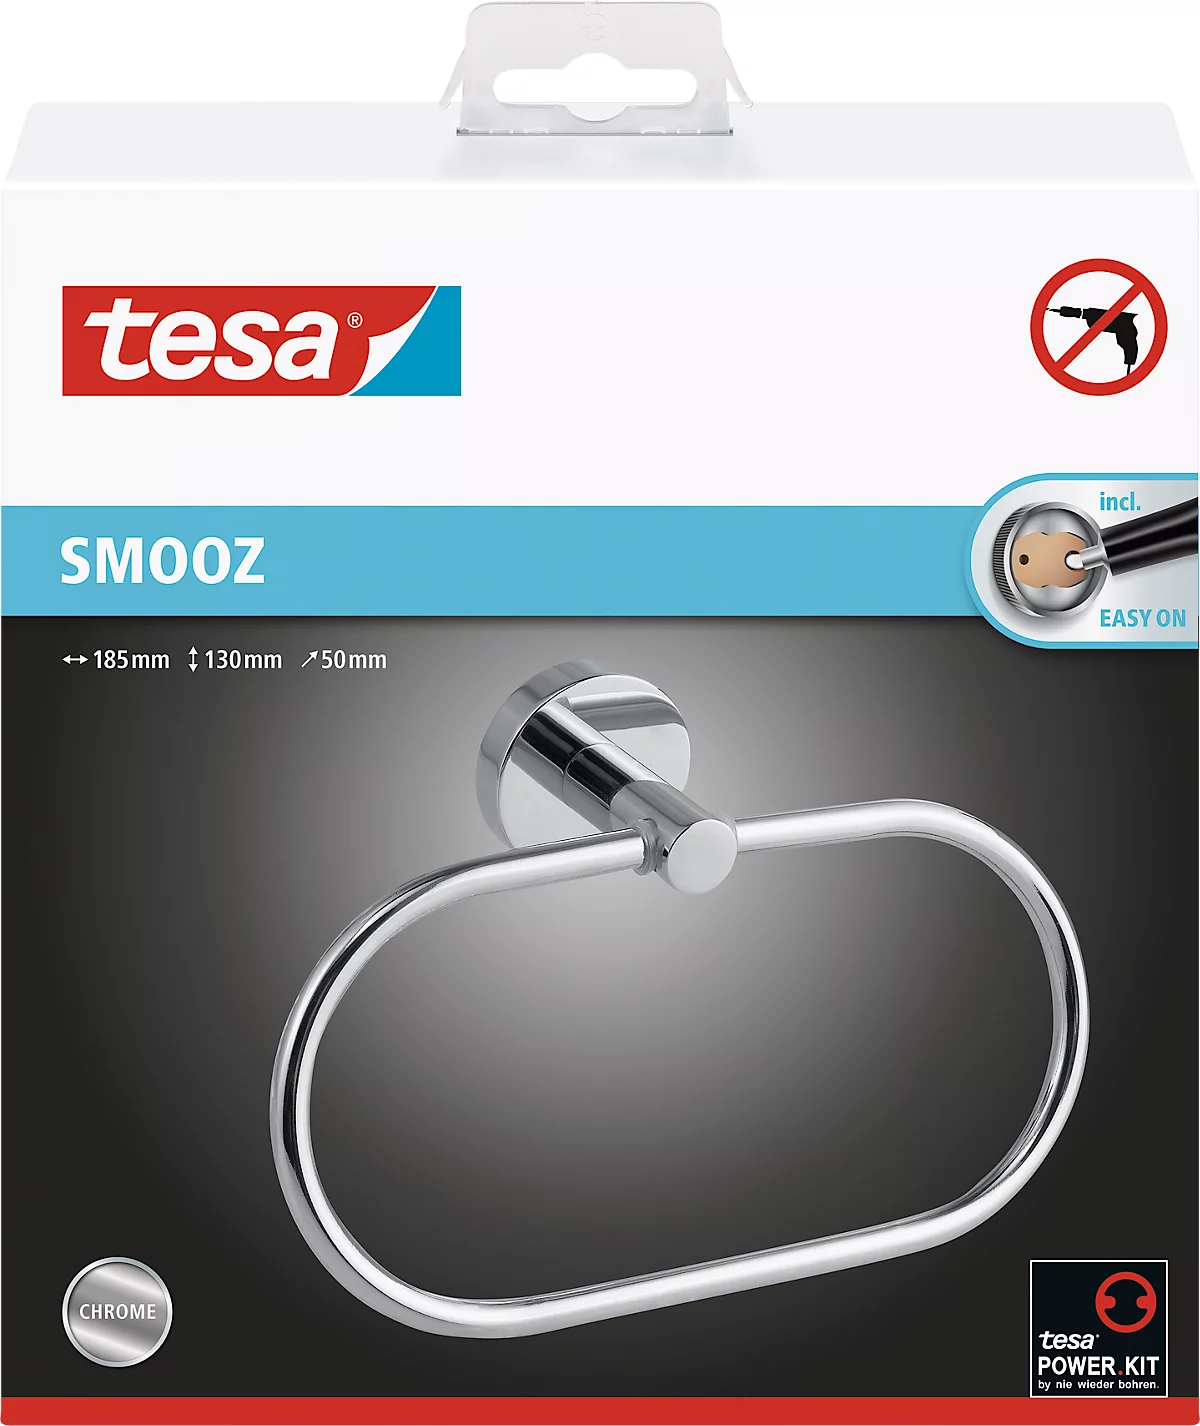 Handtuchhalter-Ring tesa Smooz, Befestigung ohne Bohren, ablösbar, chrom